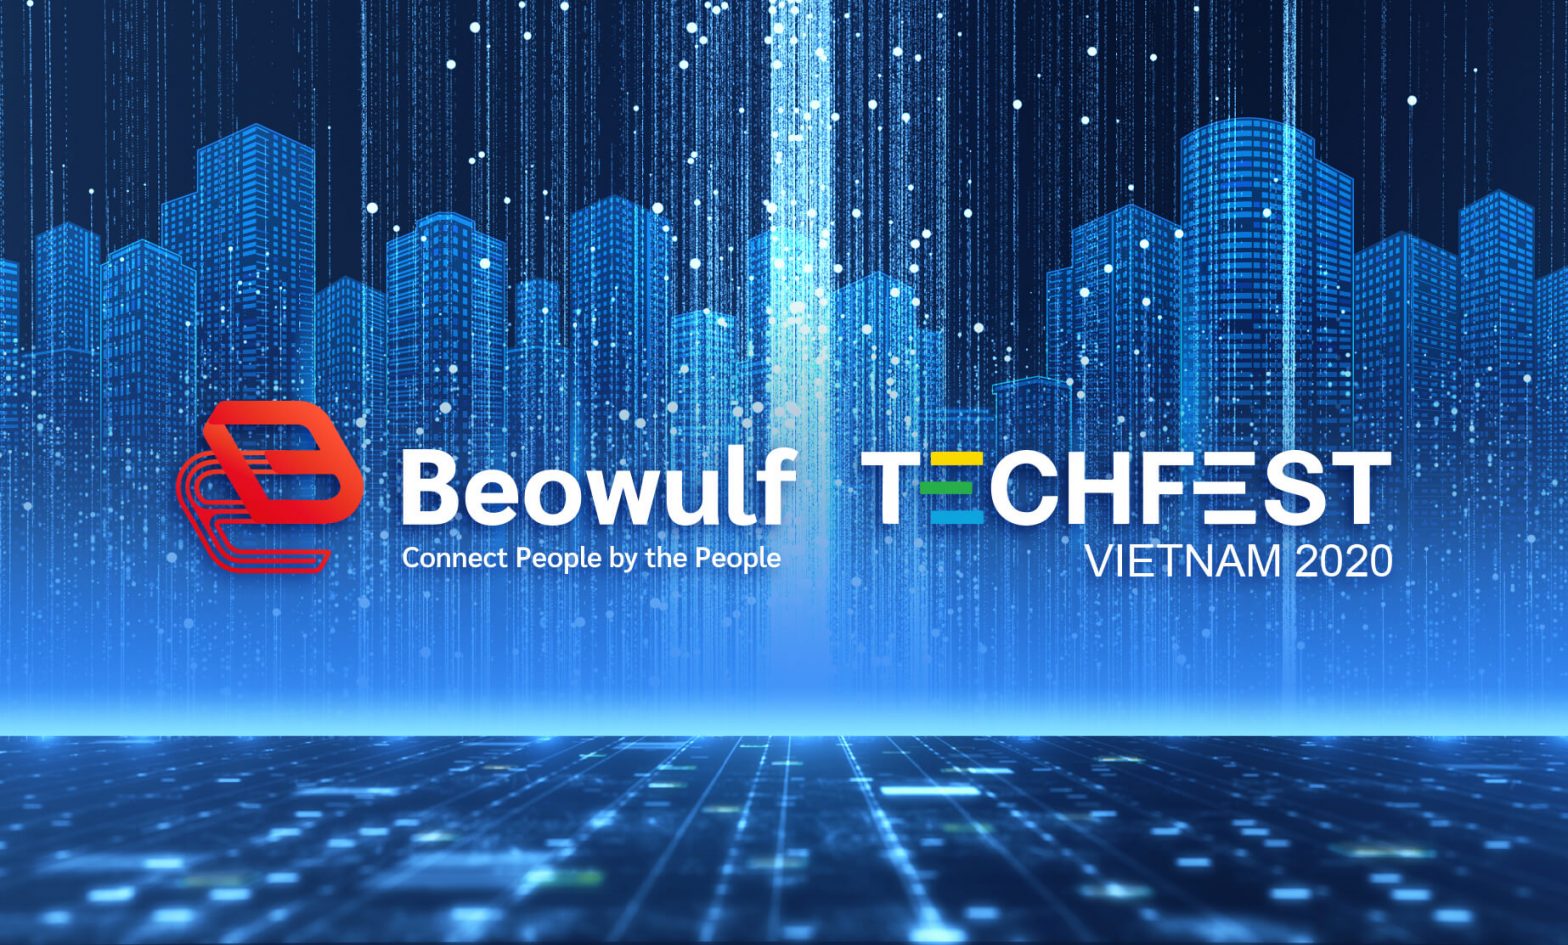 Beowulf是越南最大的国家商业和启动社区盛会的首席技术互助伙伴